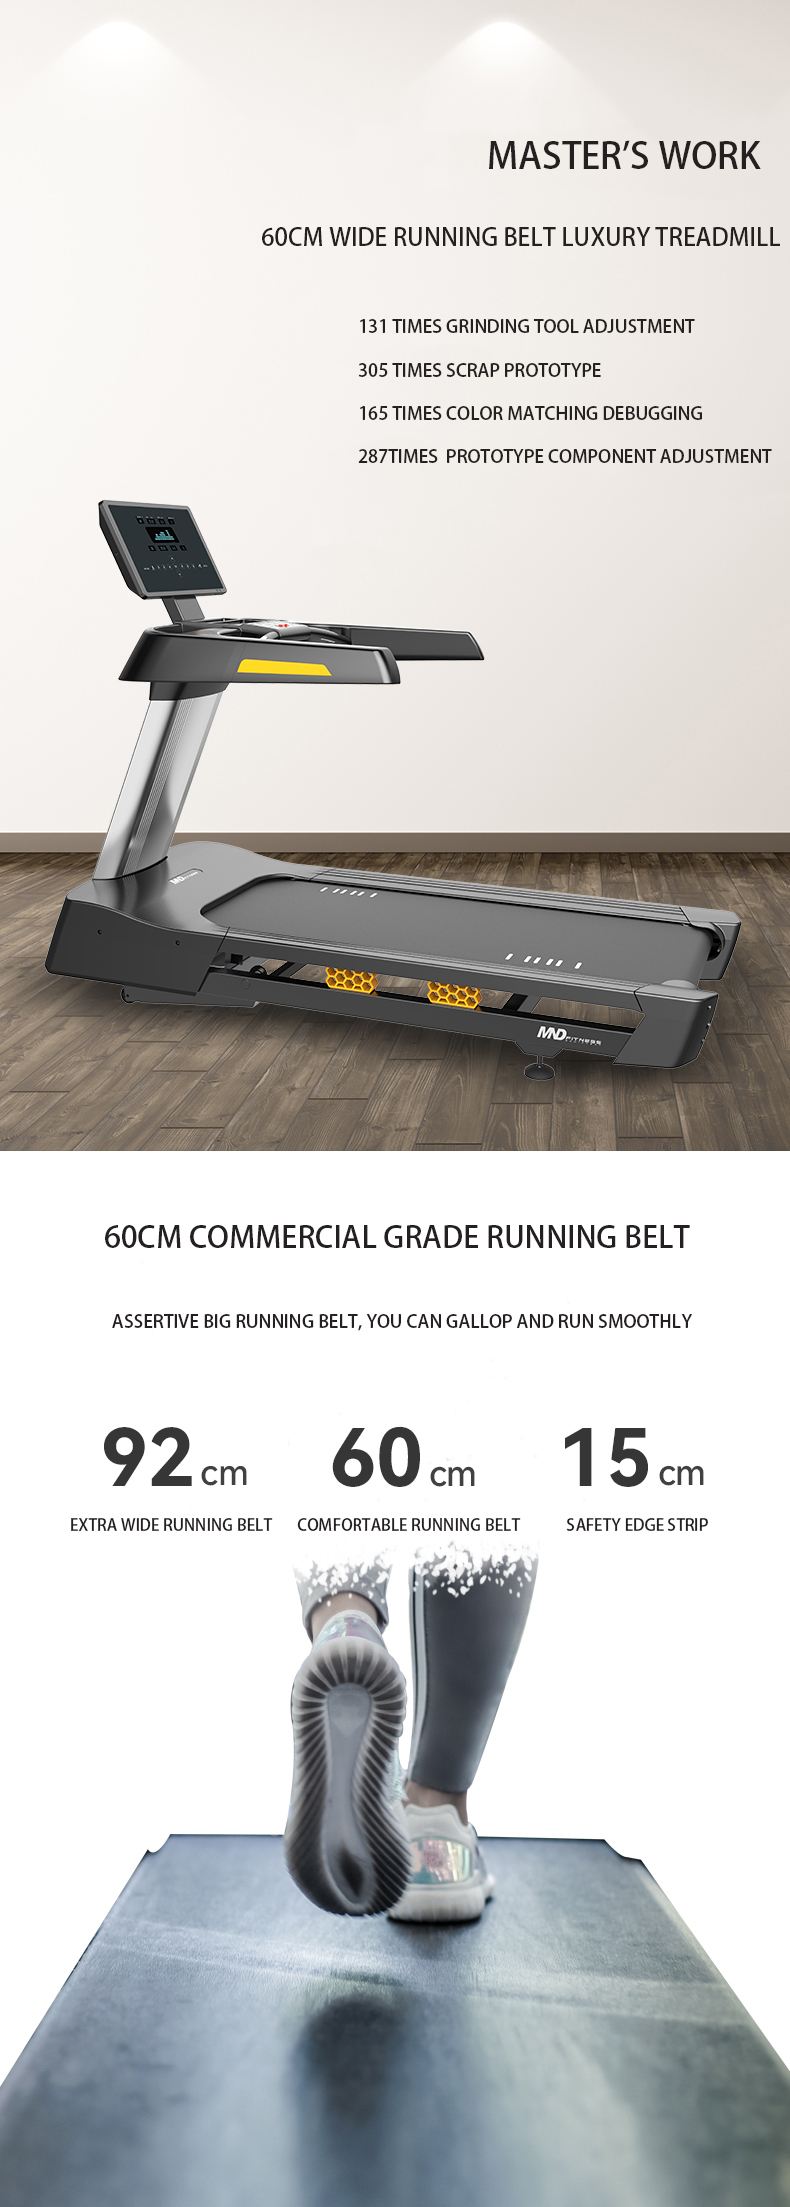 Good Quality Gym 3HP Treadmill Cardio Gym Equipment Routine Gym Equipment Online Fitness